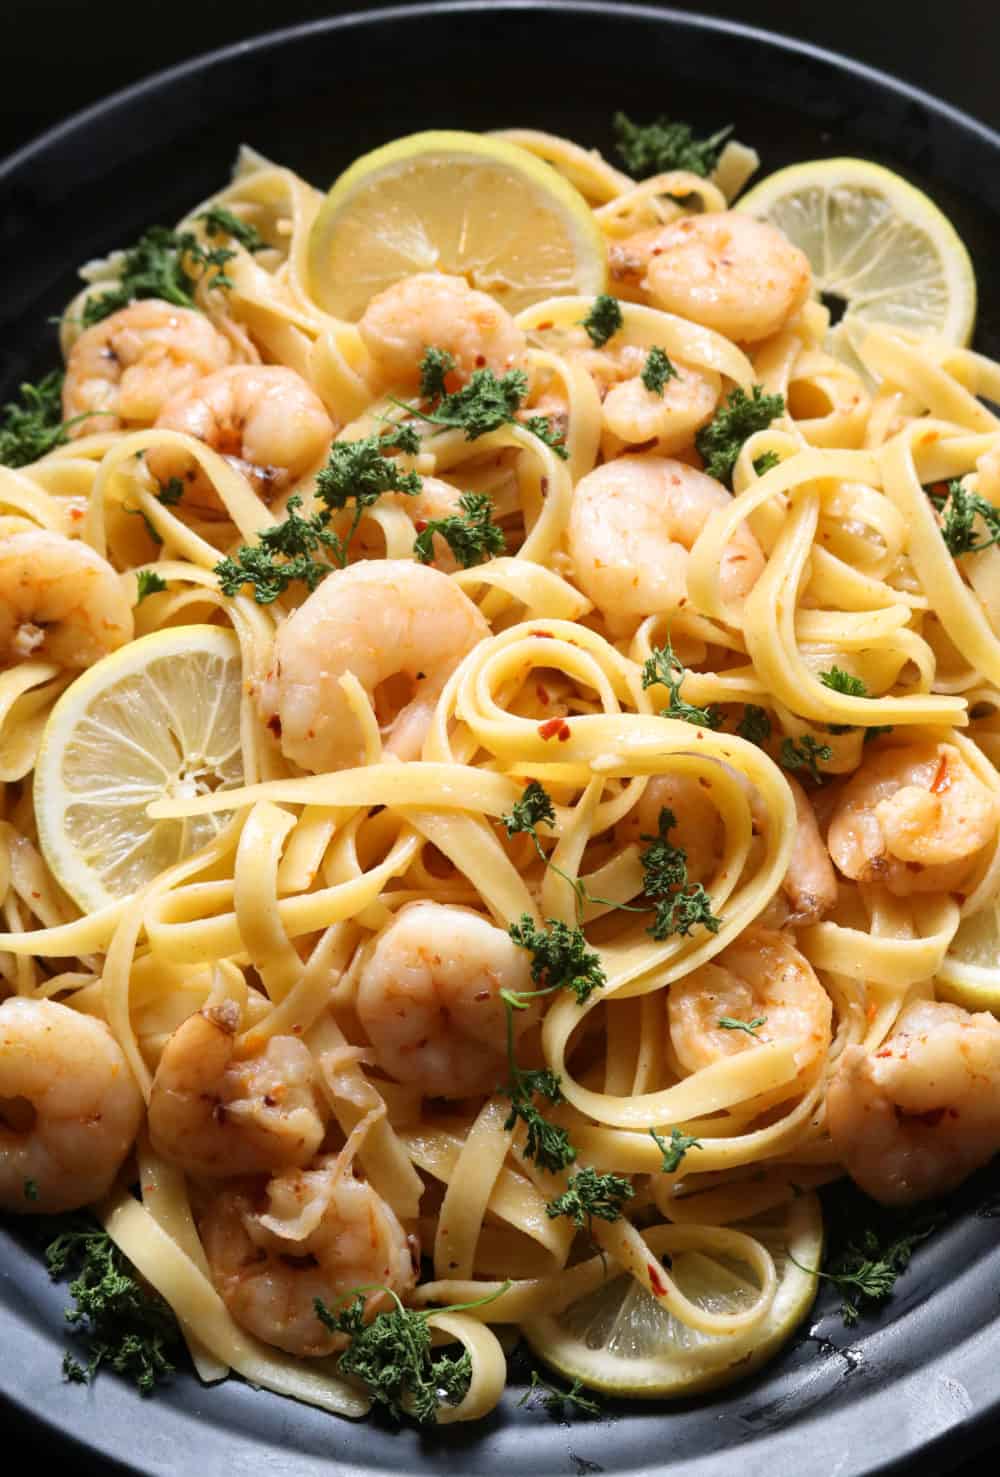 garlic lemon shrimp pasta served on a plate.